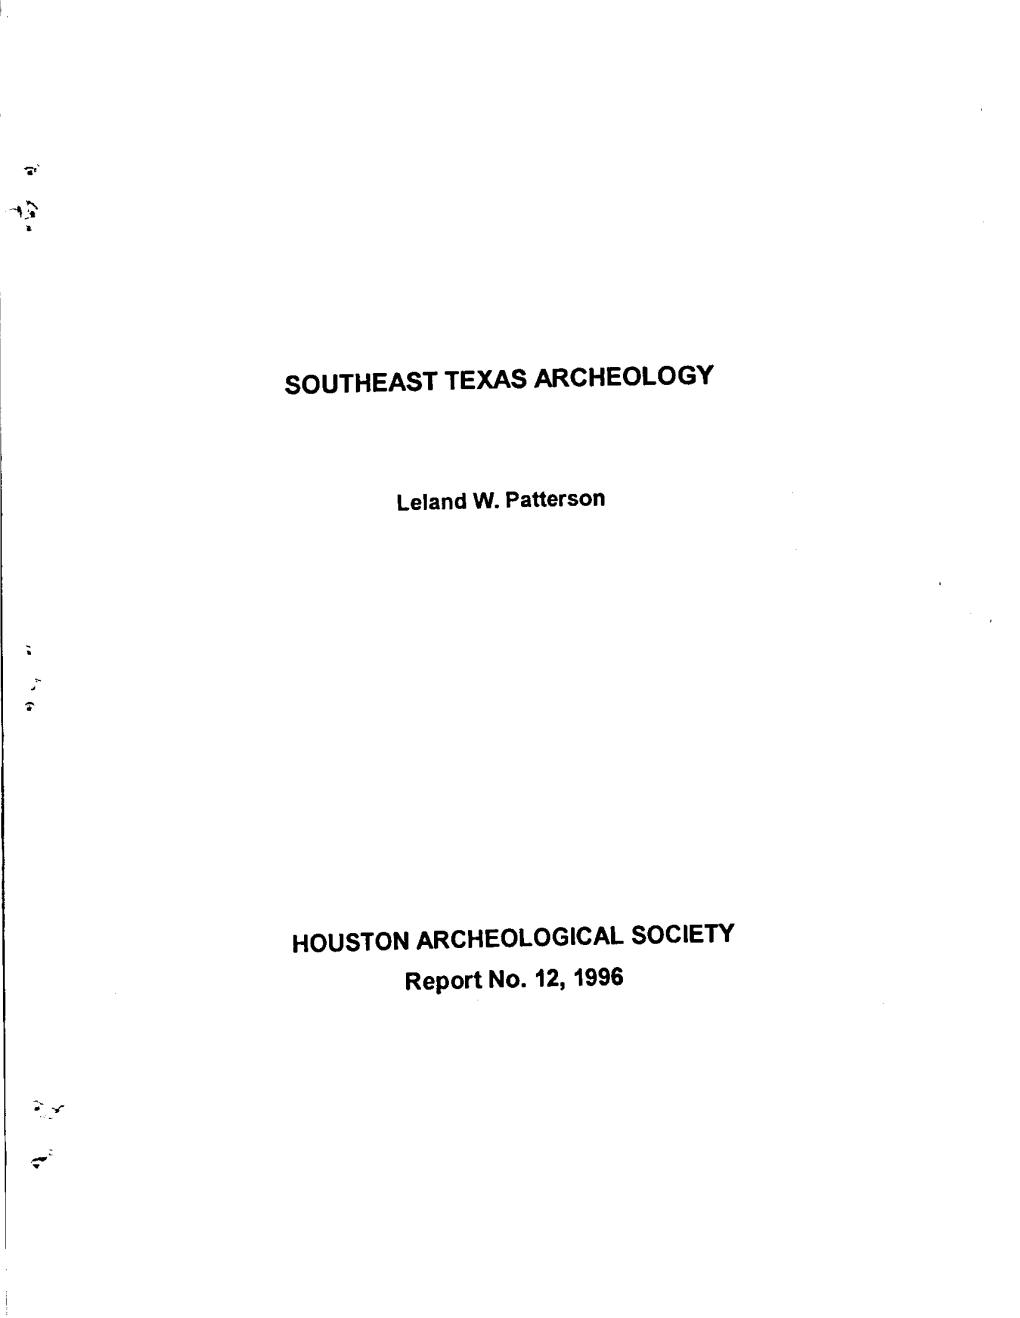 SOUTHEAST TEXAS ARCHEOLOGY HOUSTON ARCHEOLOGICAL SOCIETY Report No. 12, 1996 SOUTHEAST TEXAS ARCHEOLOGY